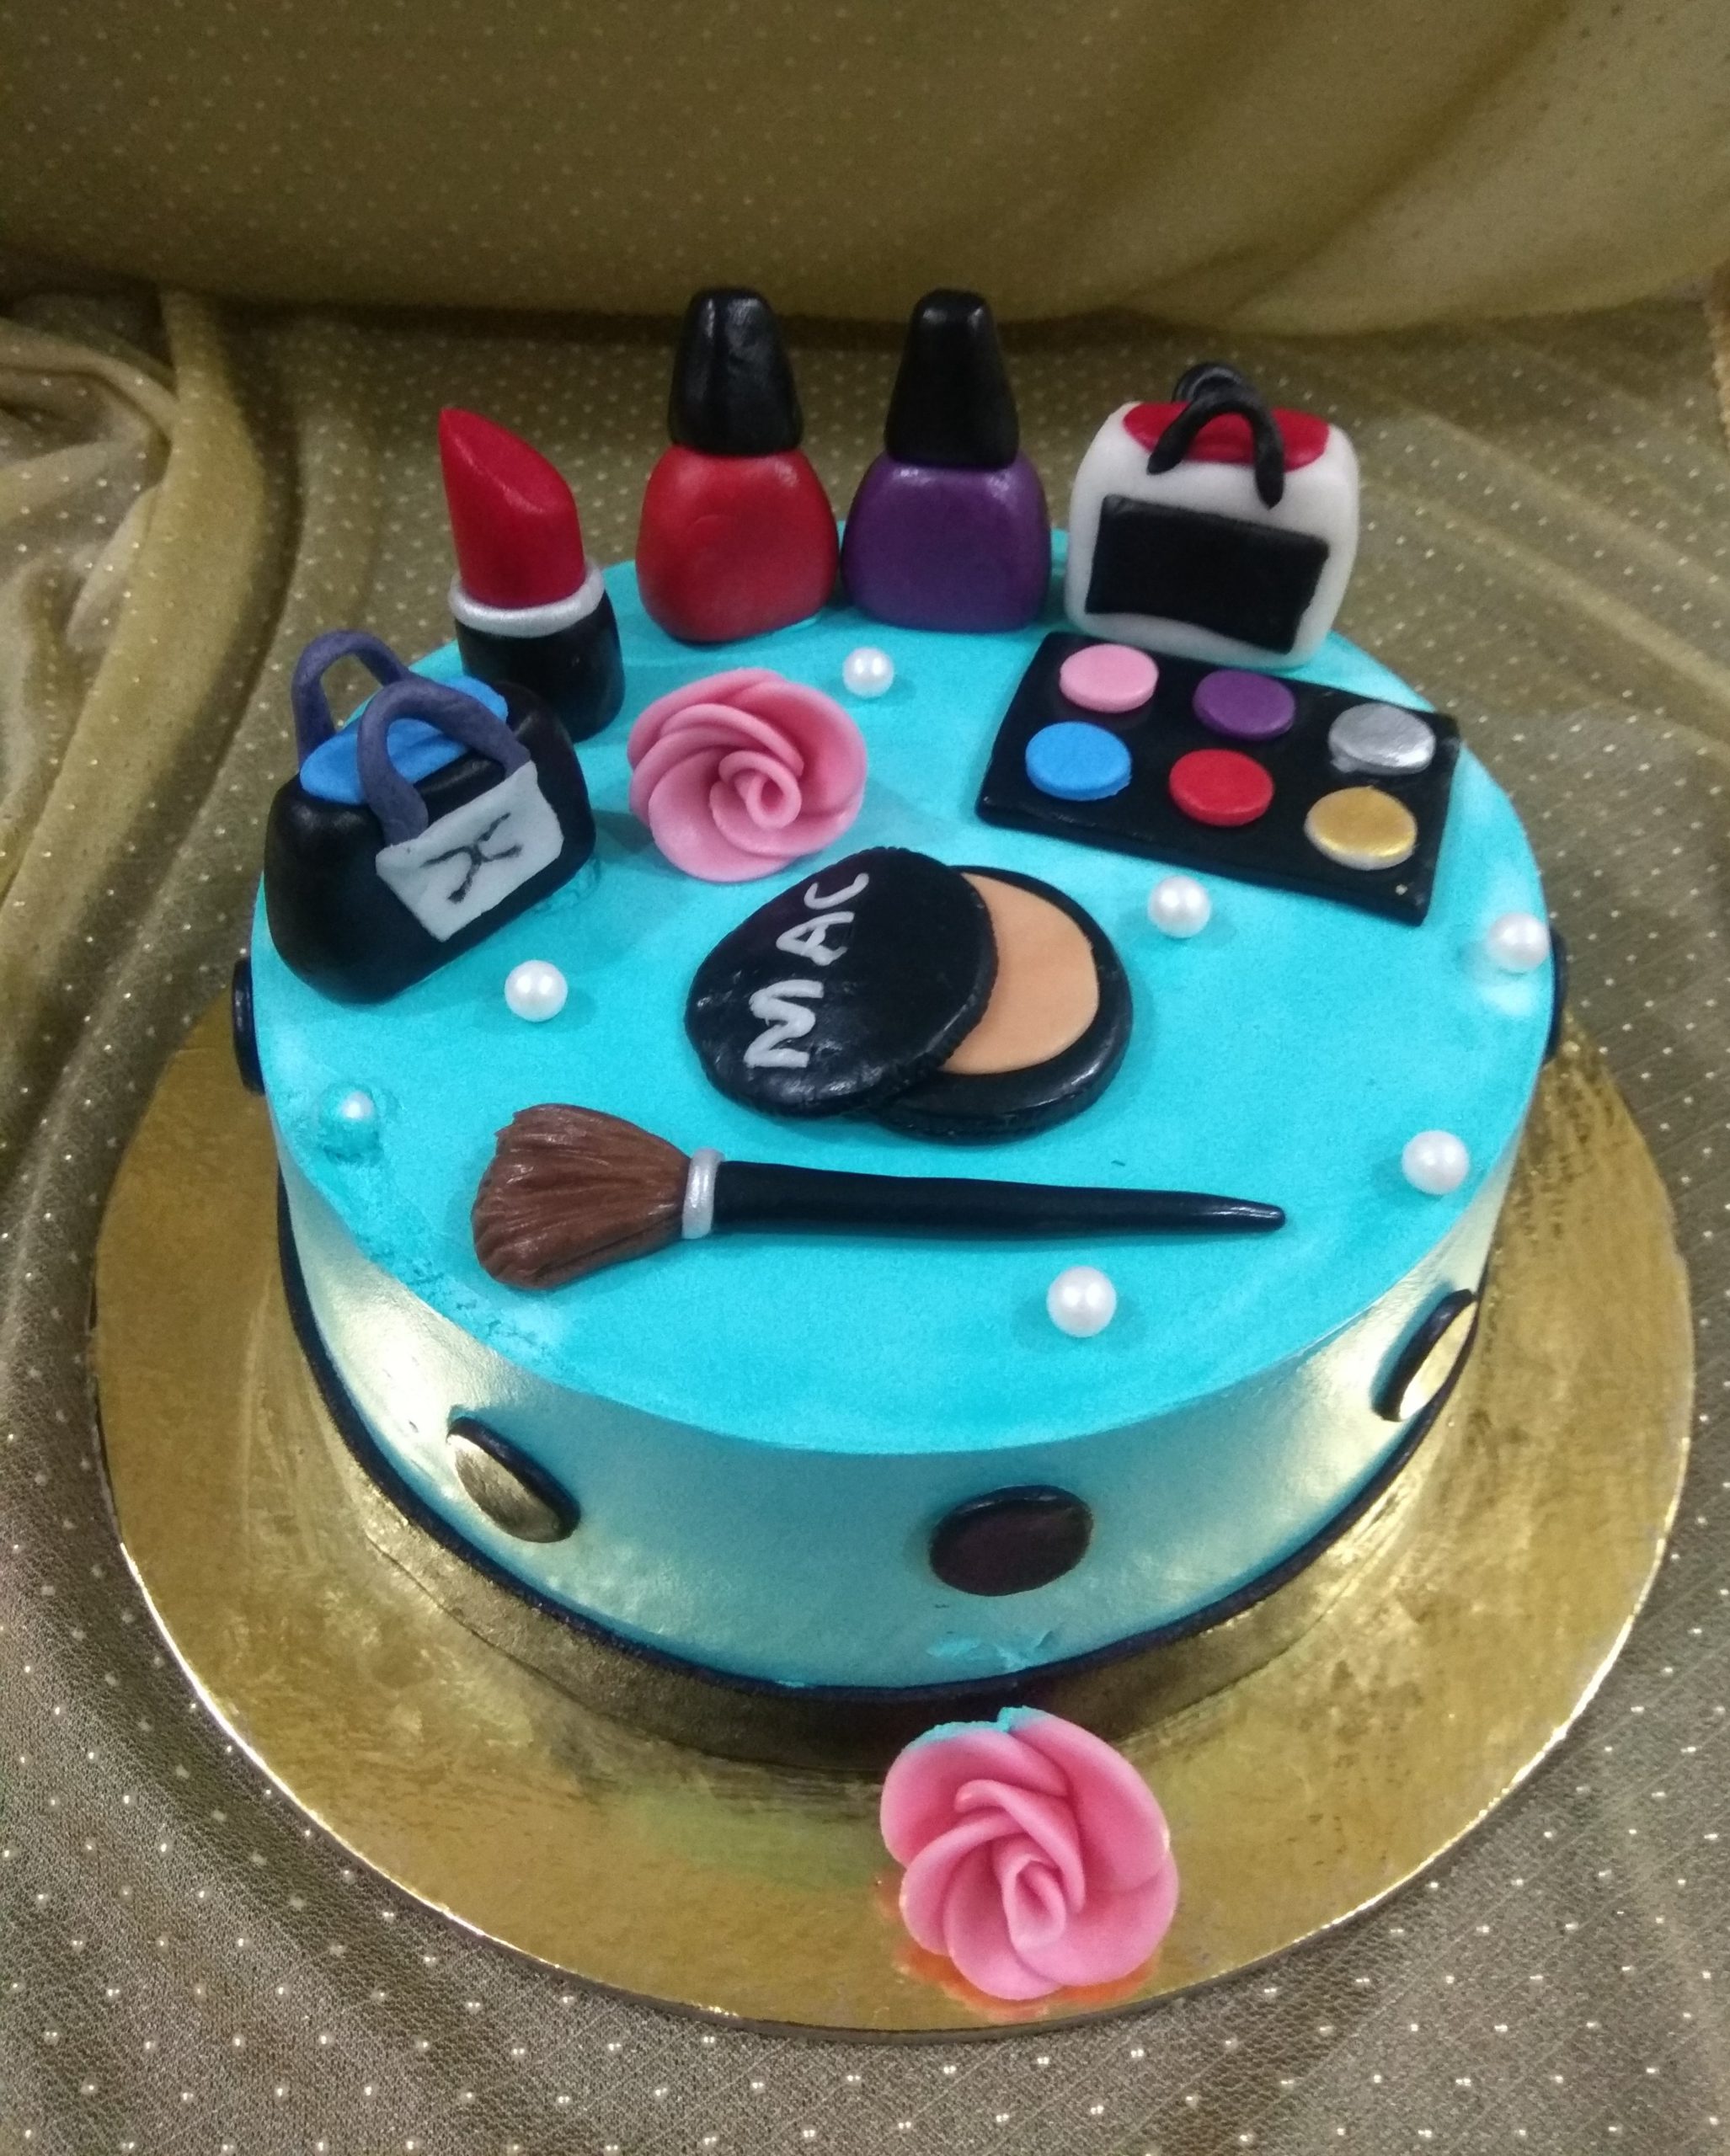 Make-Up Theme Cake Designs, Images, Price Near Me